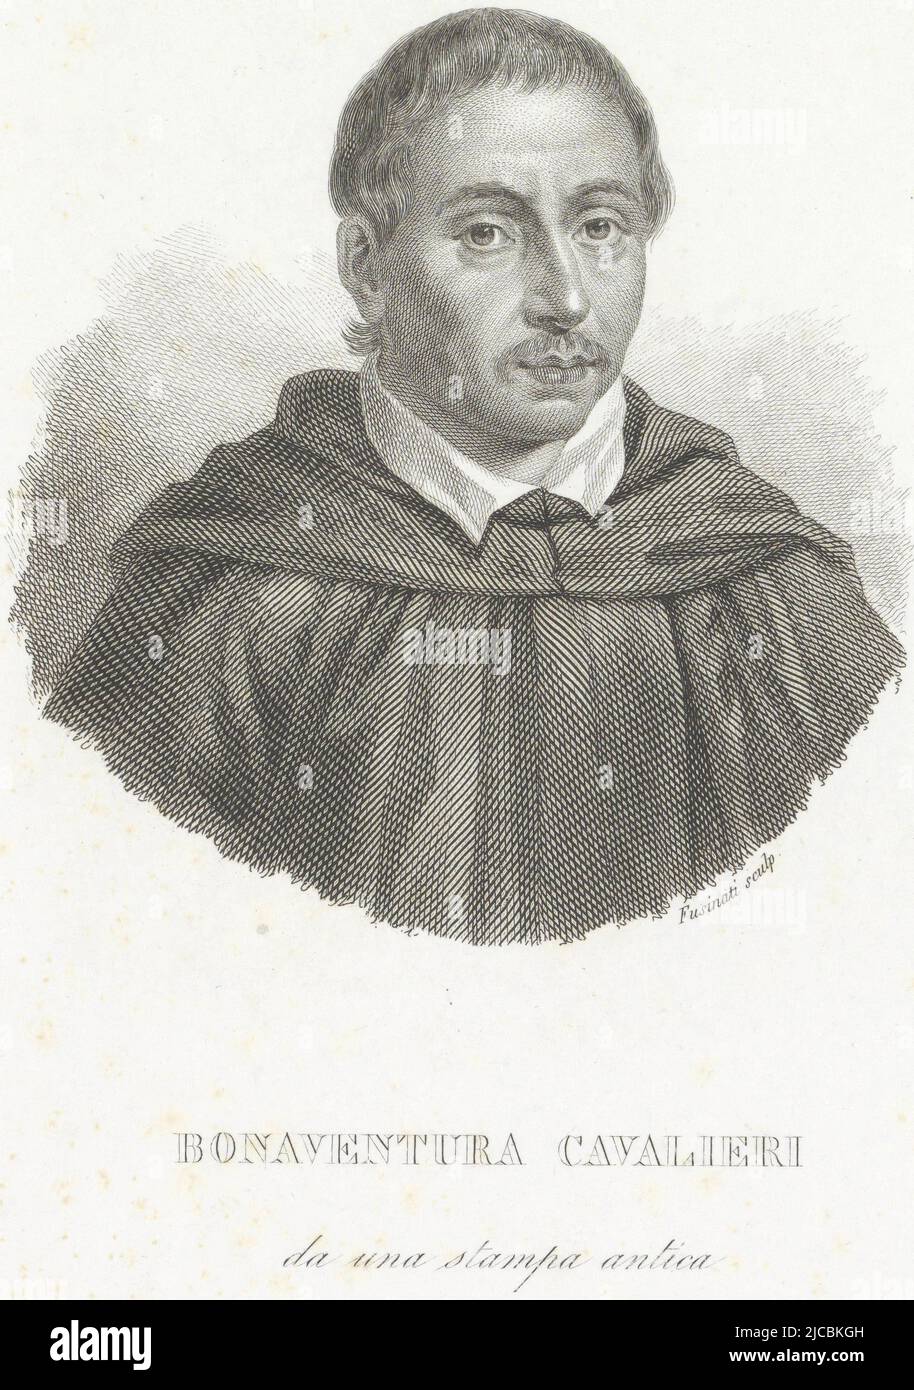 Portrait of scientist Bonaventura Cavalieri, print maker: Giuseppe Fusinati, (mentioned on object), Italy, 1813 - 1883, paper, engraving, h 265 mm - w 164 mm Stock Photo